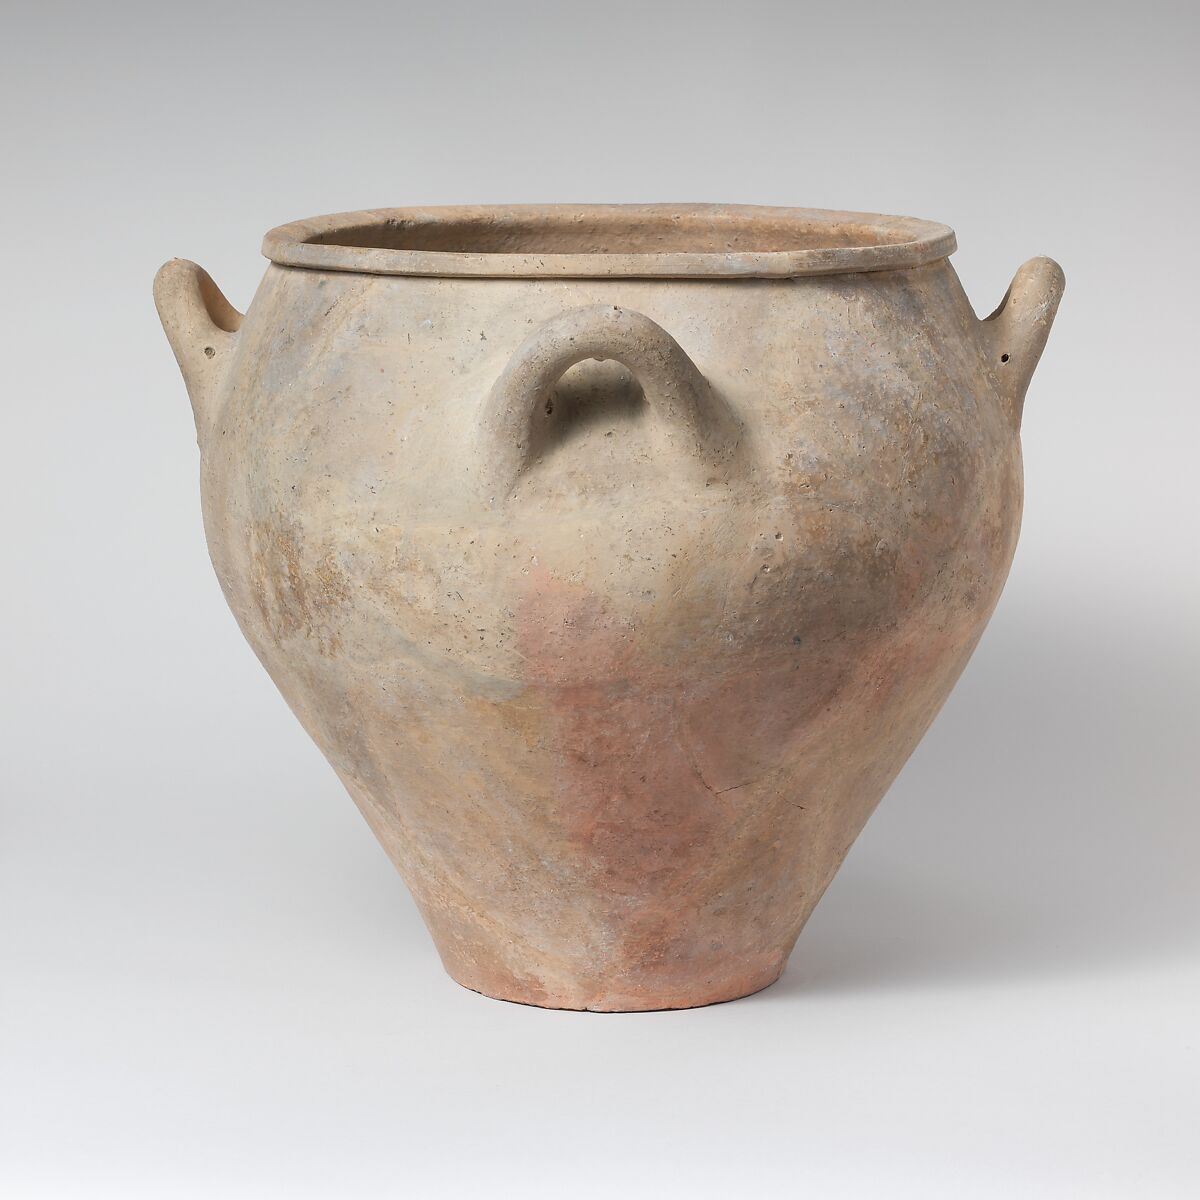 Terracotta krater (deep bowl) with four handles, Terracotta, Mycenaean 